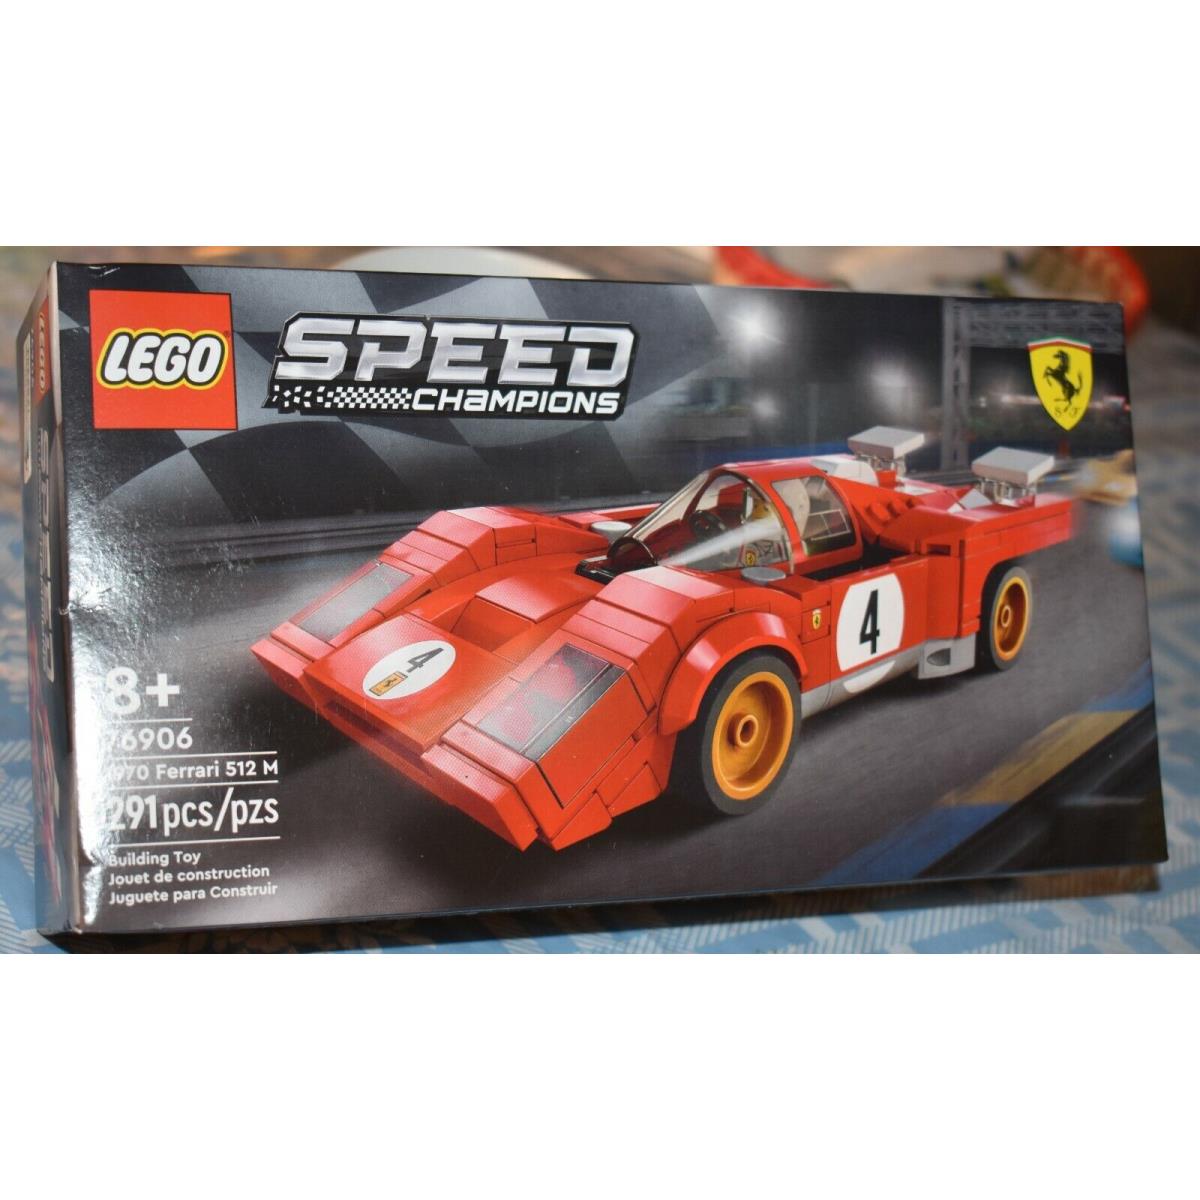 Lego Speed Champions 1970 Ferrari 512 M 291 Pcs